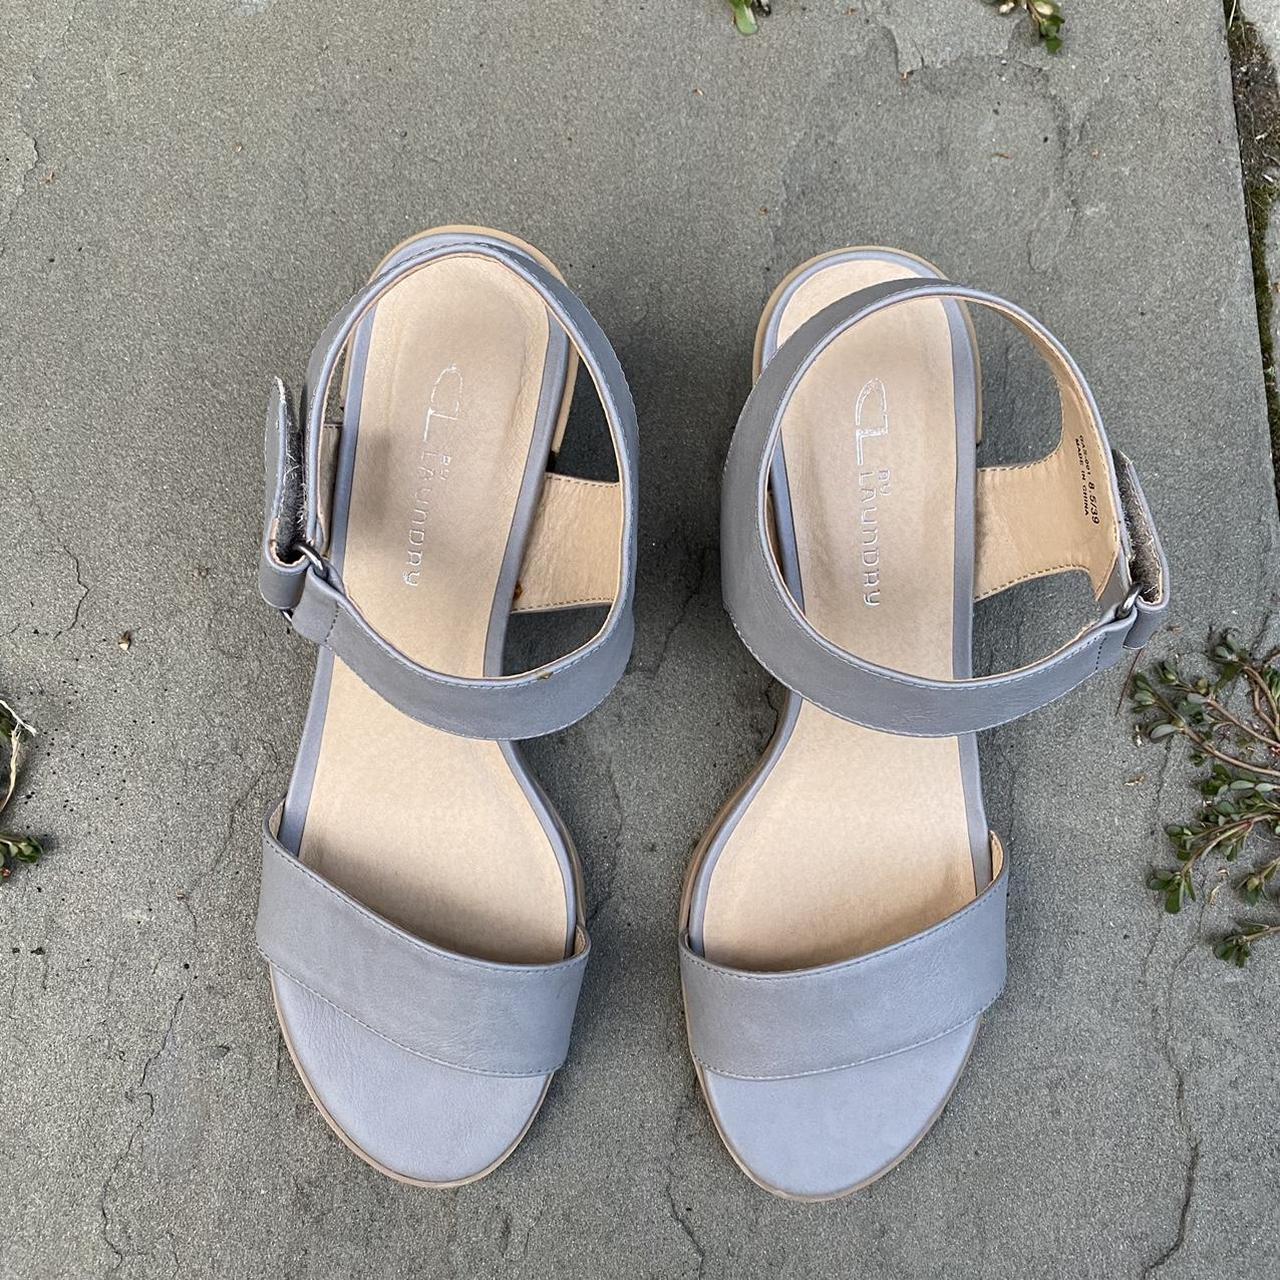 Product Image 2 - Pale slate grey high heeled